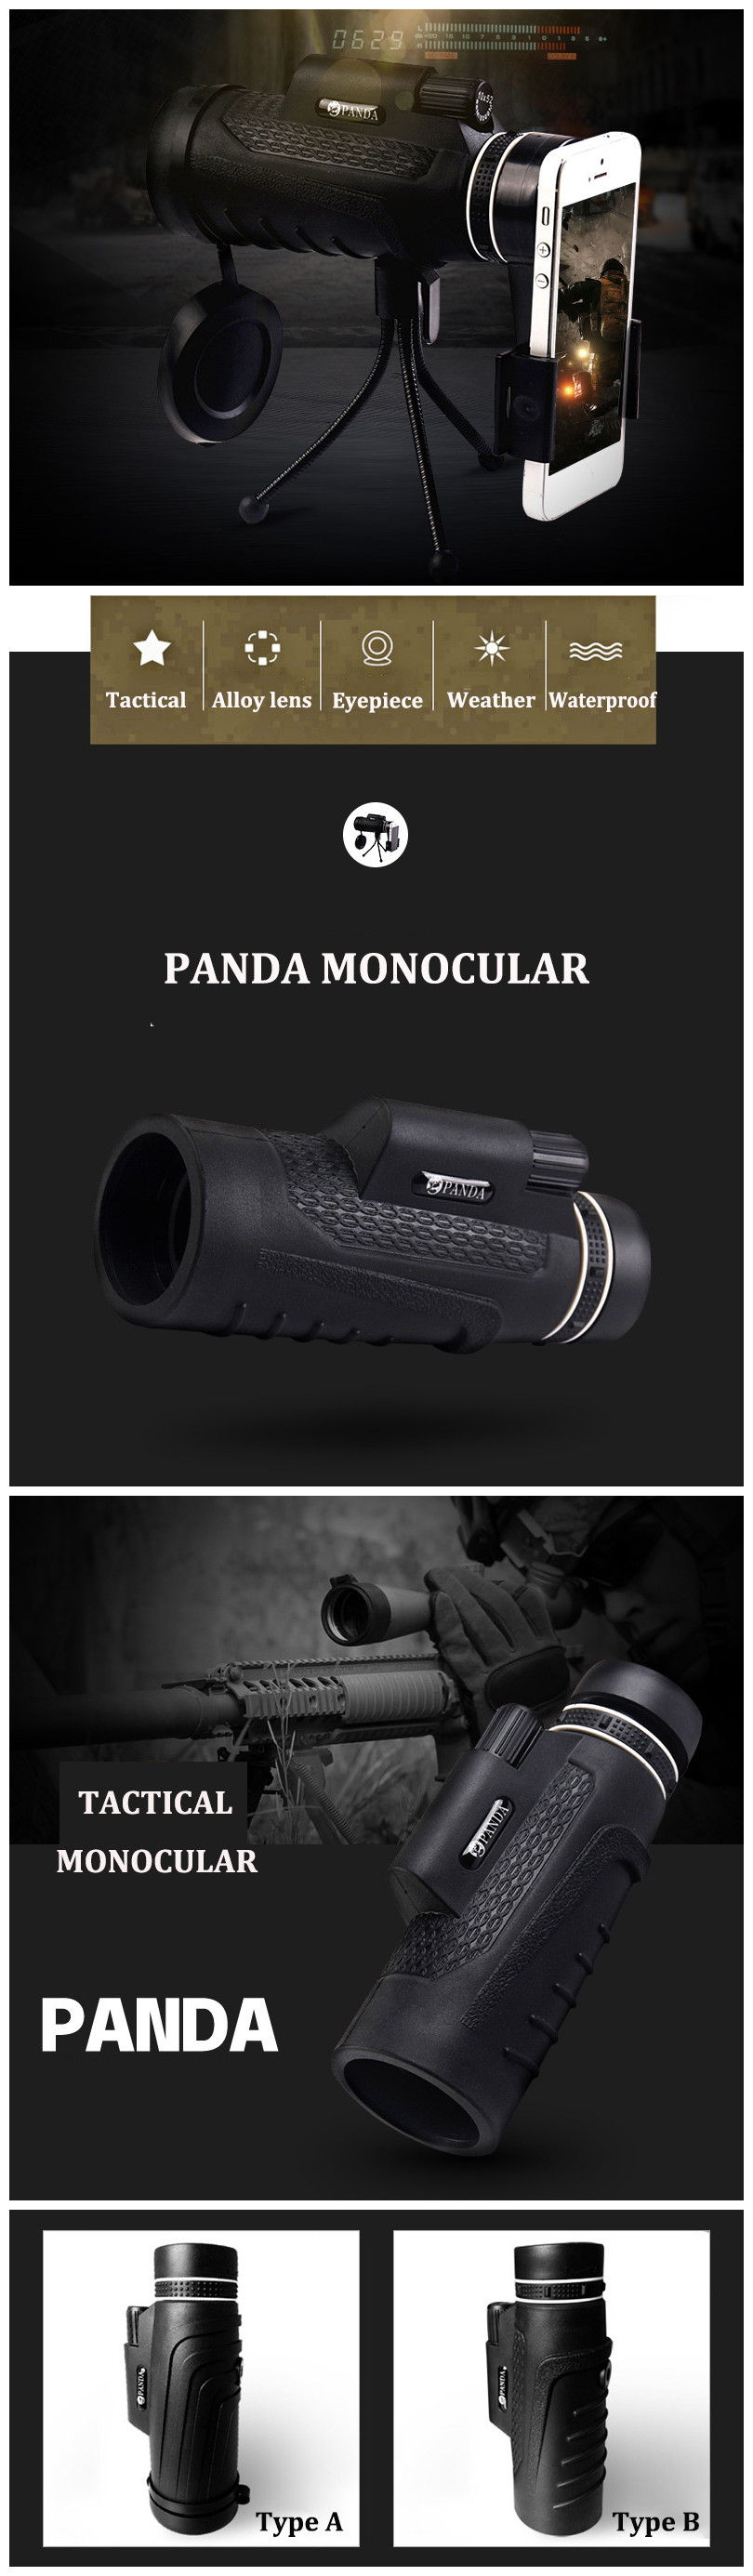 Panda-40X60-Monocular-Hunting-Optic-Len-Telescope-HD-Night-Vision-With-Tripod-Phone-Clip-1642687-1